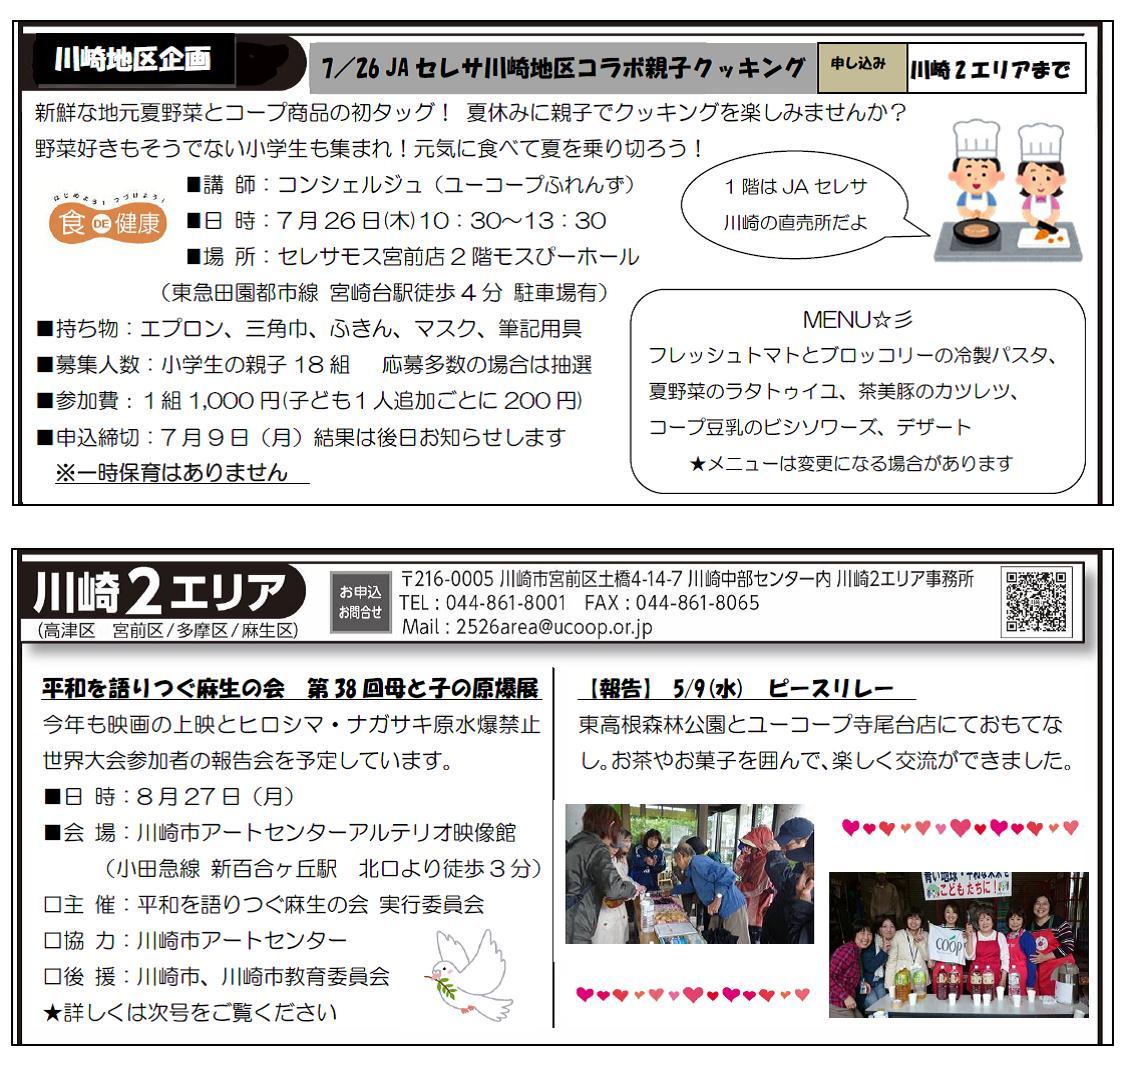 http://kanagawa.ucoop.or.jp/hiroba/areanews/files/2018.07%20areanews%20kawasaki2.jpg